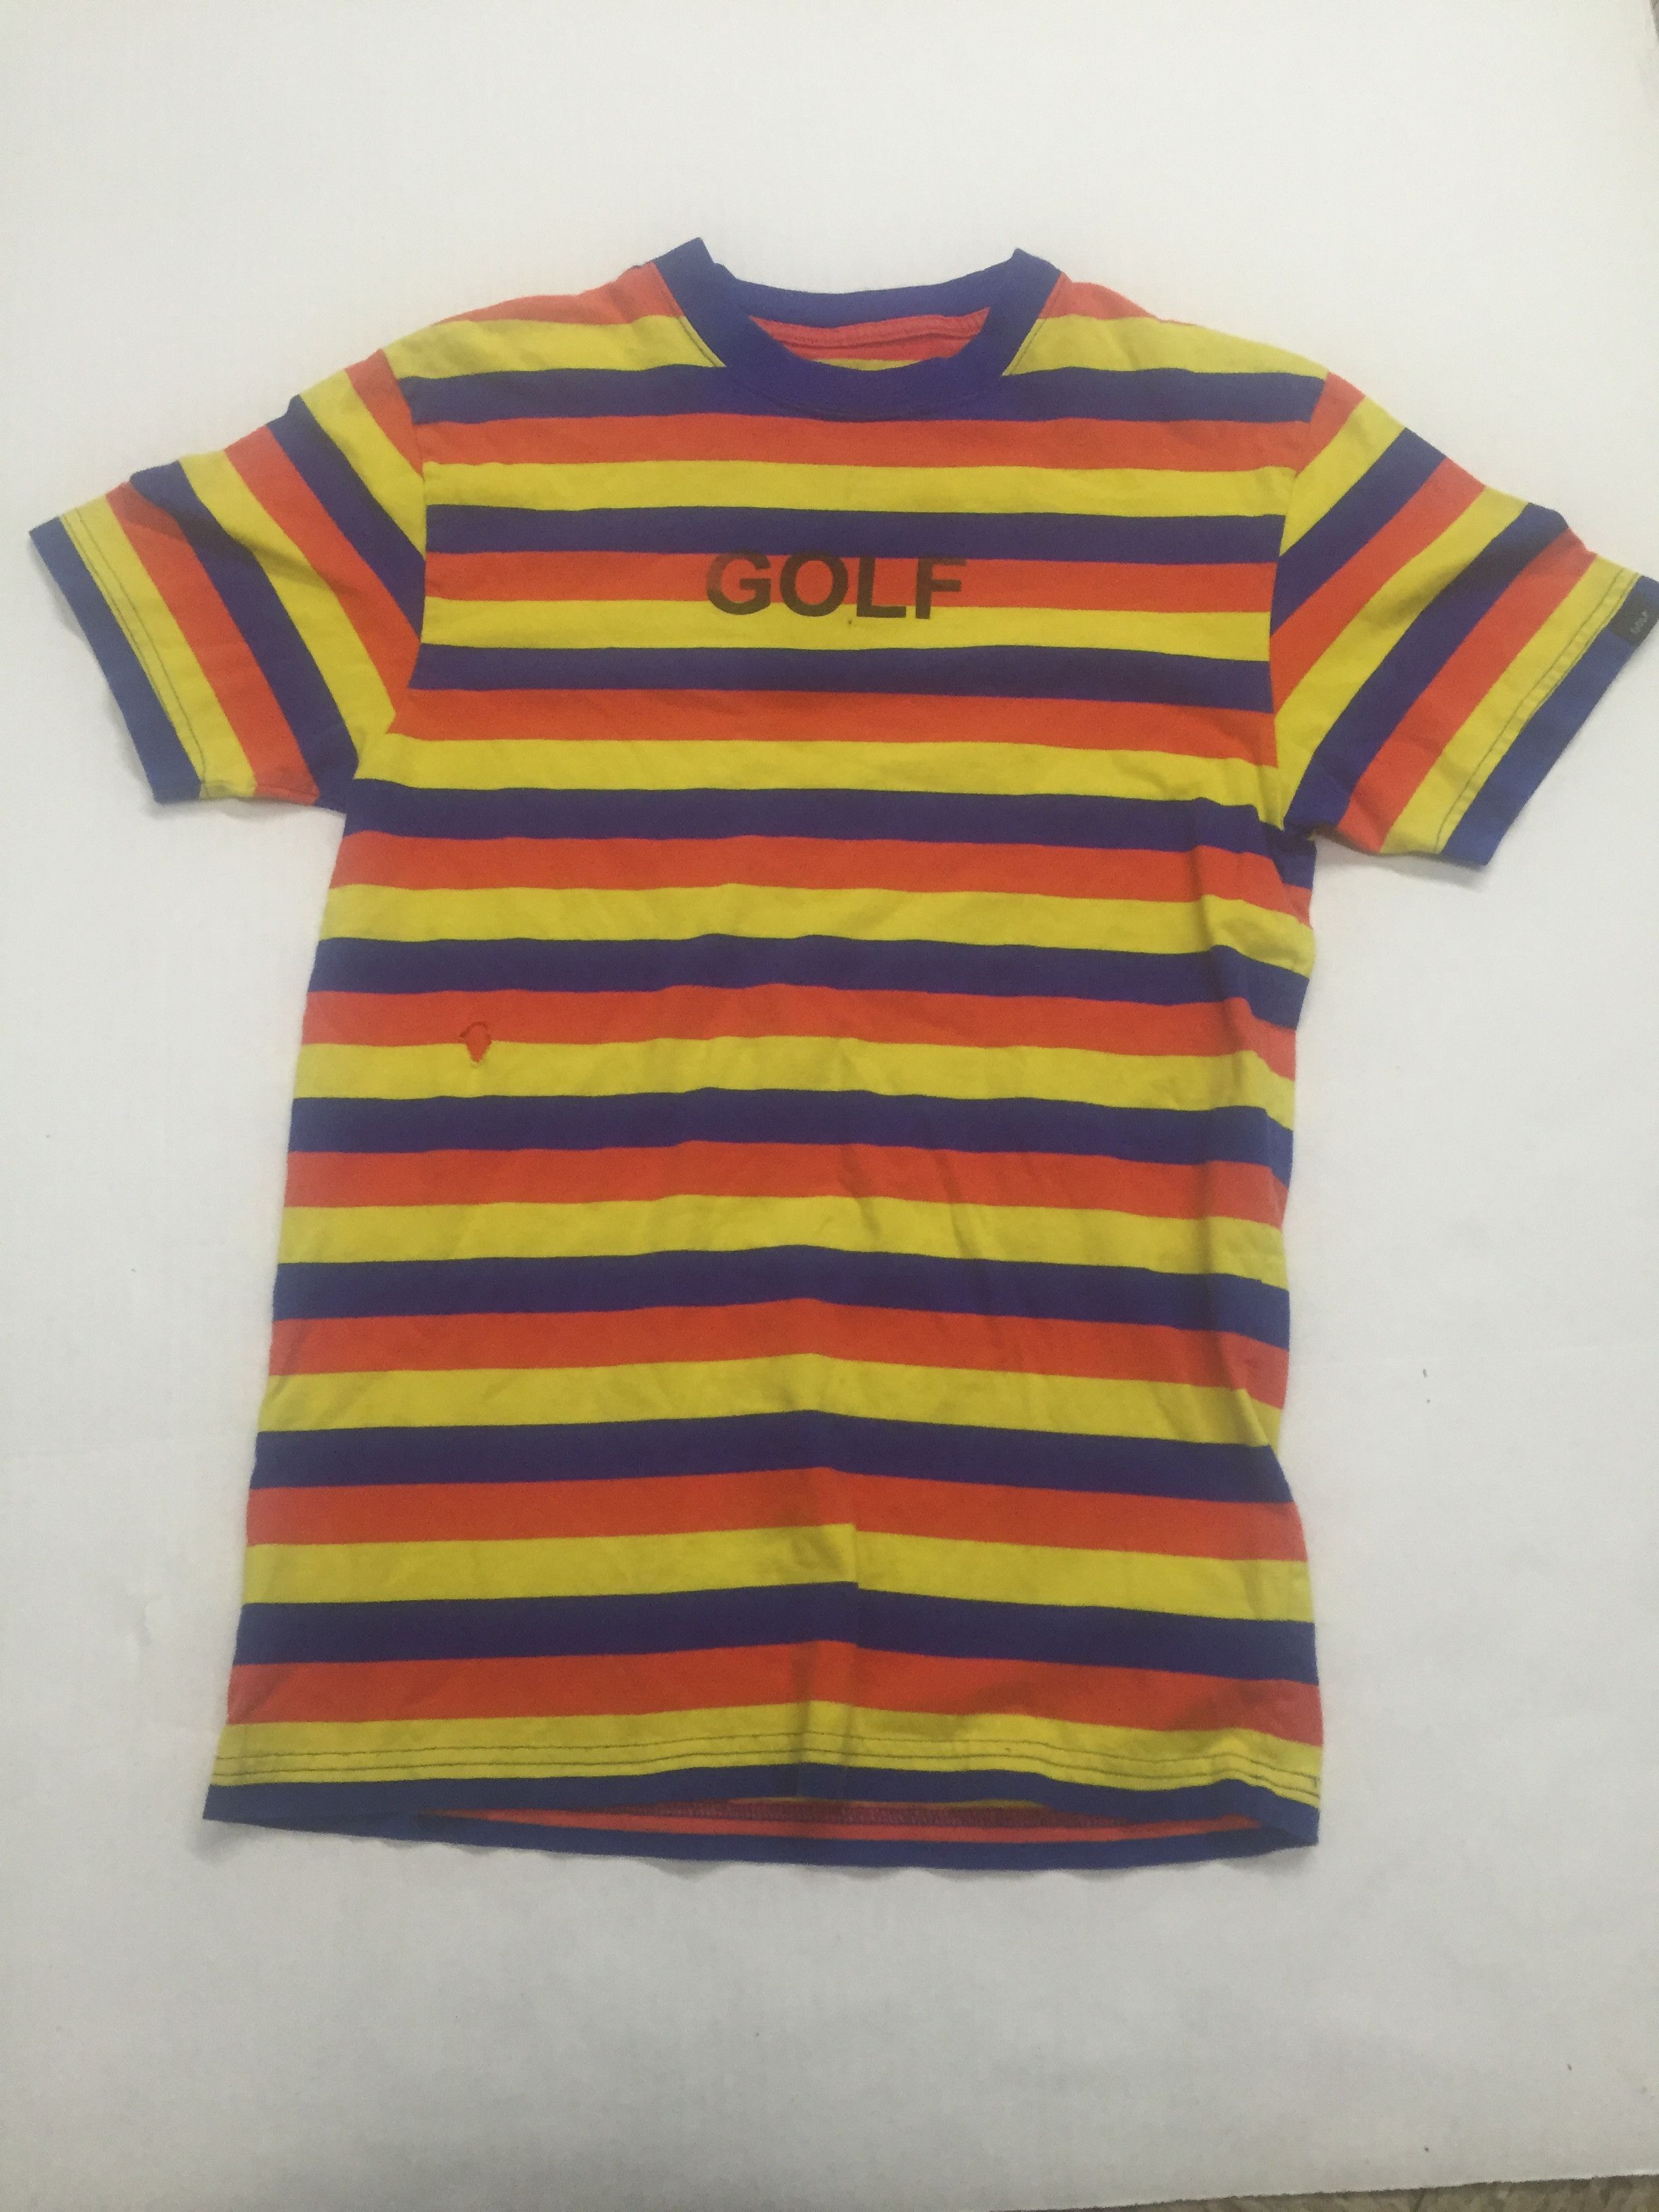 Golf Wang Golf Yellow/Red/Blue Striped Shirt Size US S / EU 44-46 / 1 - 1 Preview